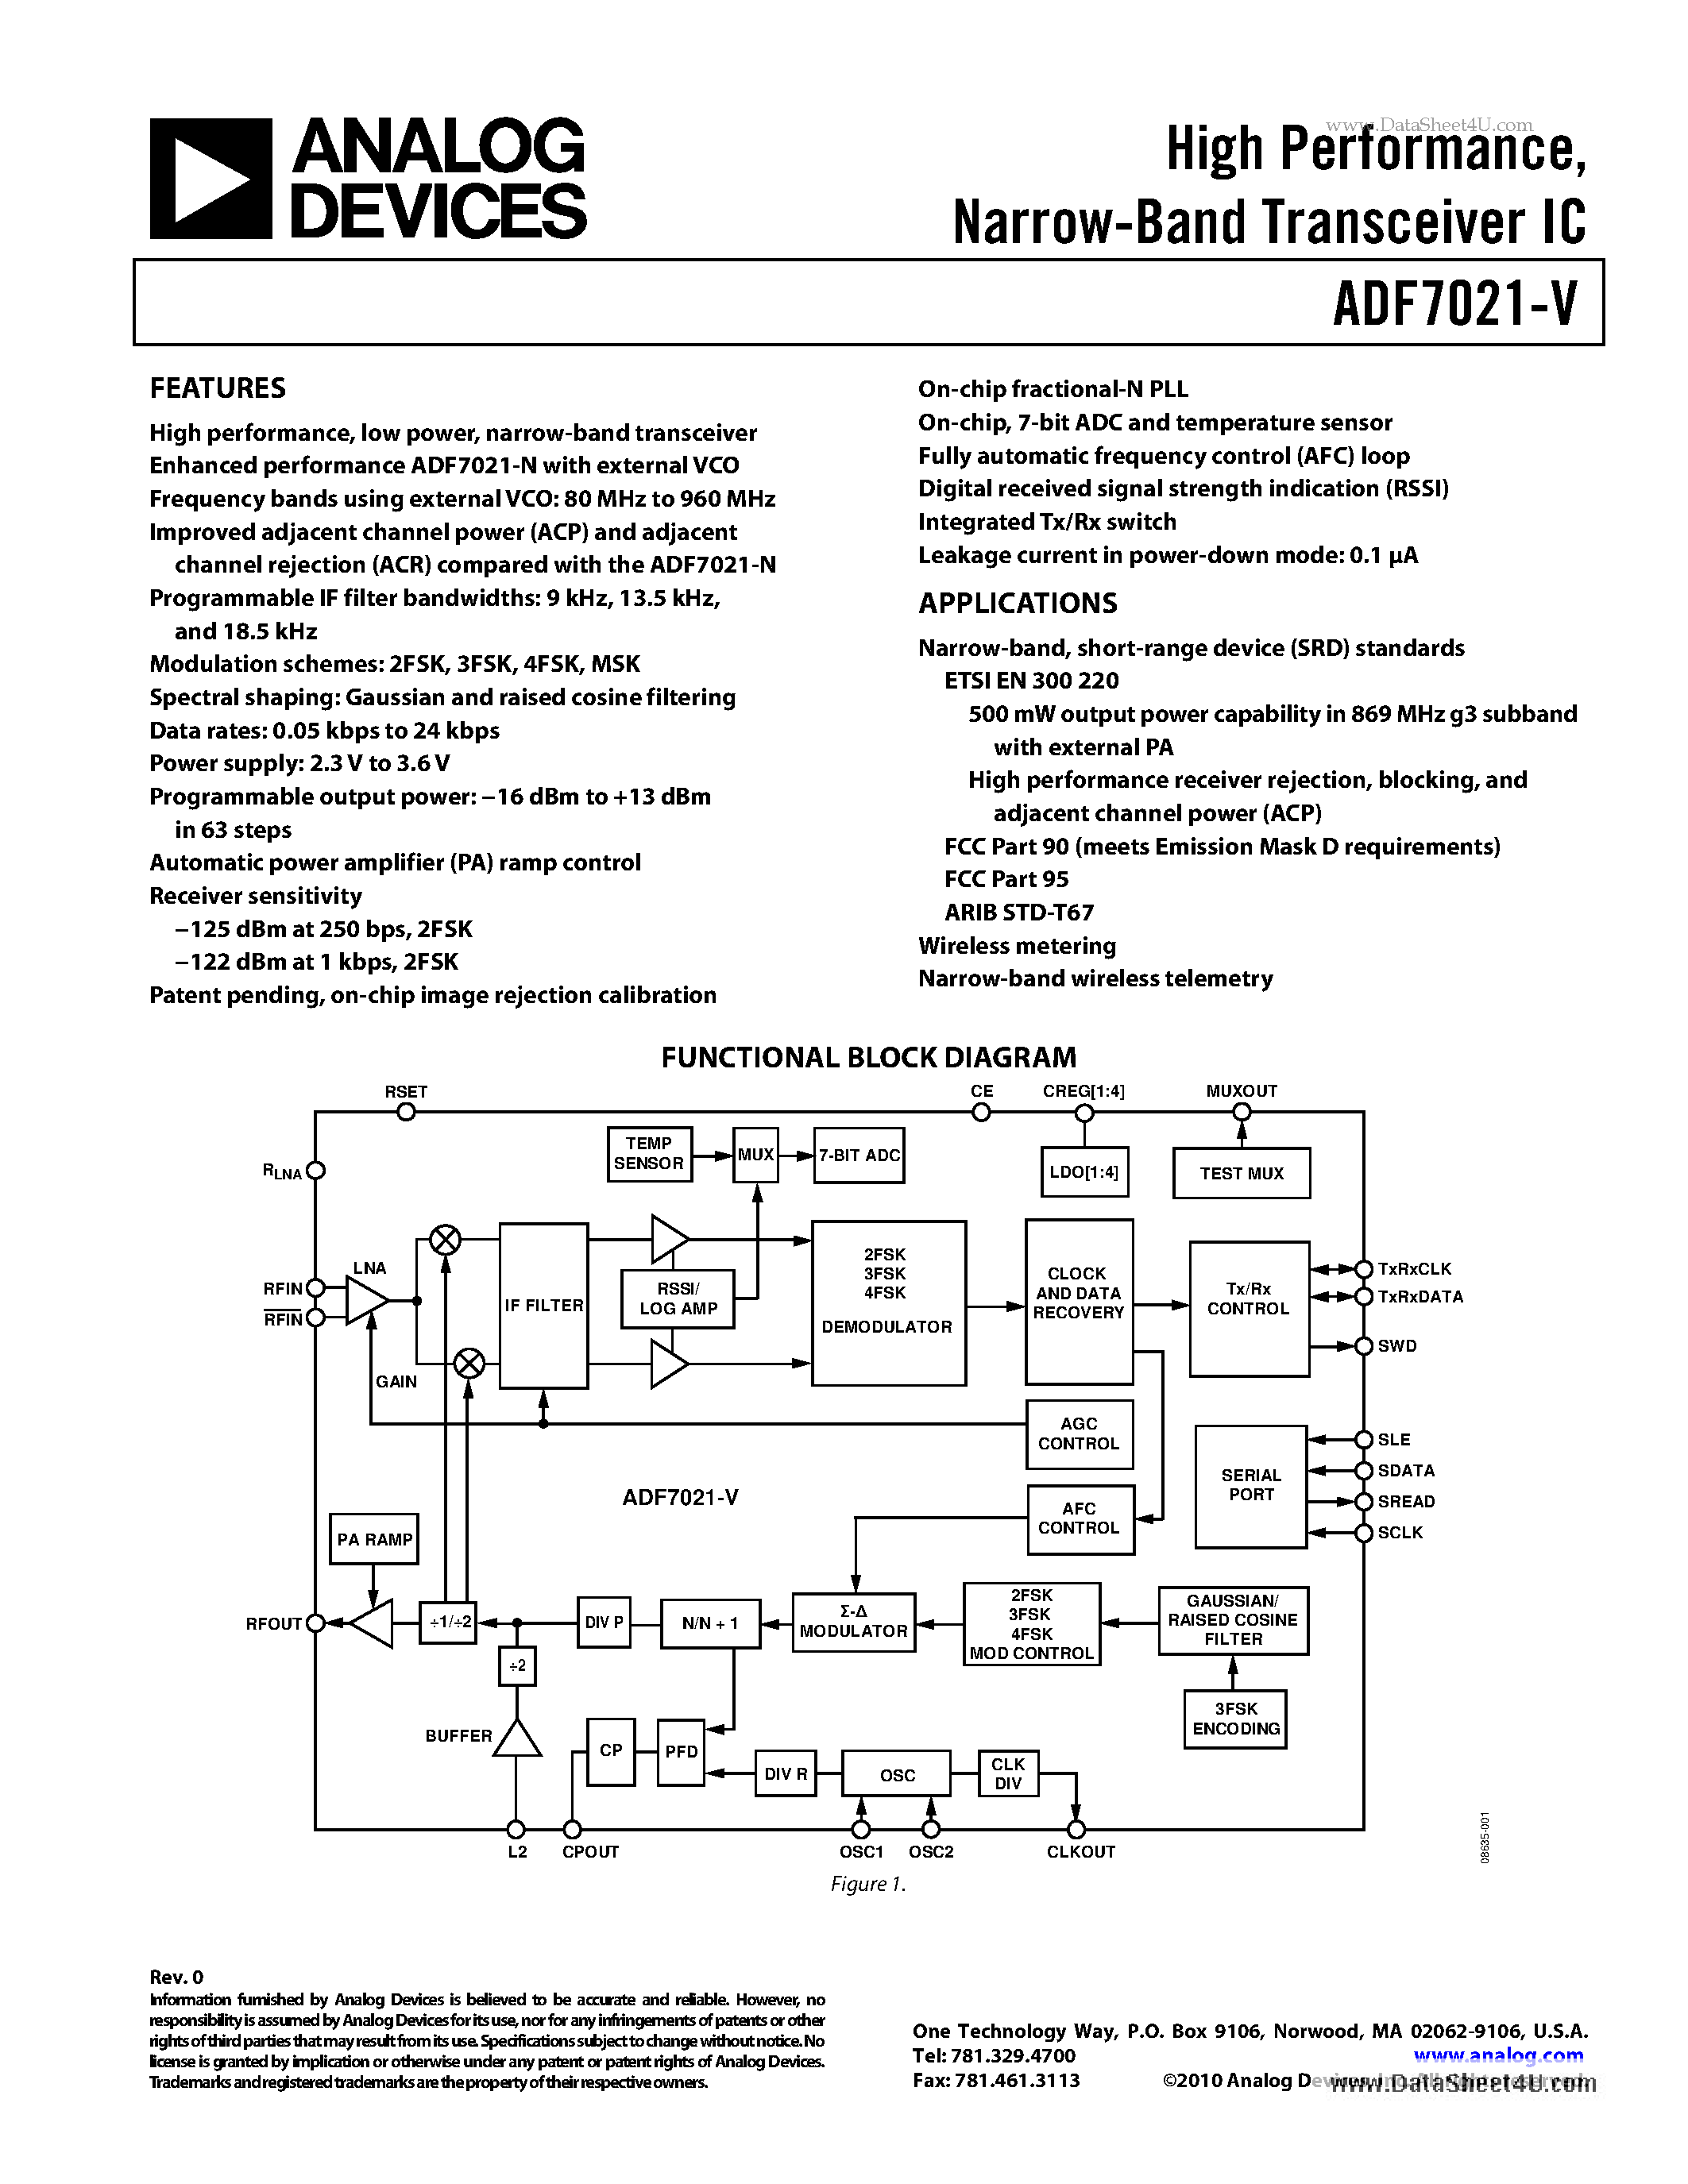 Datasheet ADF7021-V - HIgh Performance Narrow-Band Transceiver IC page 1